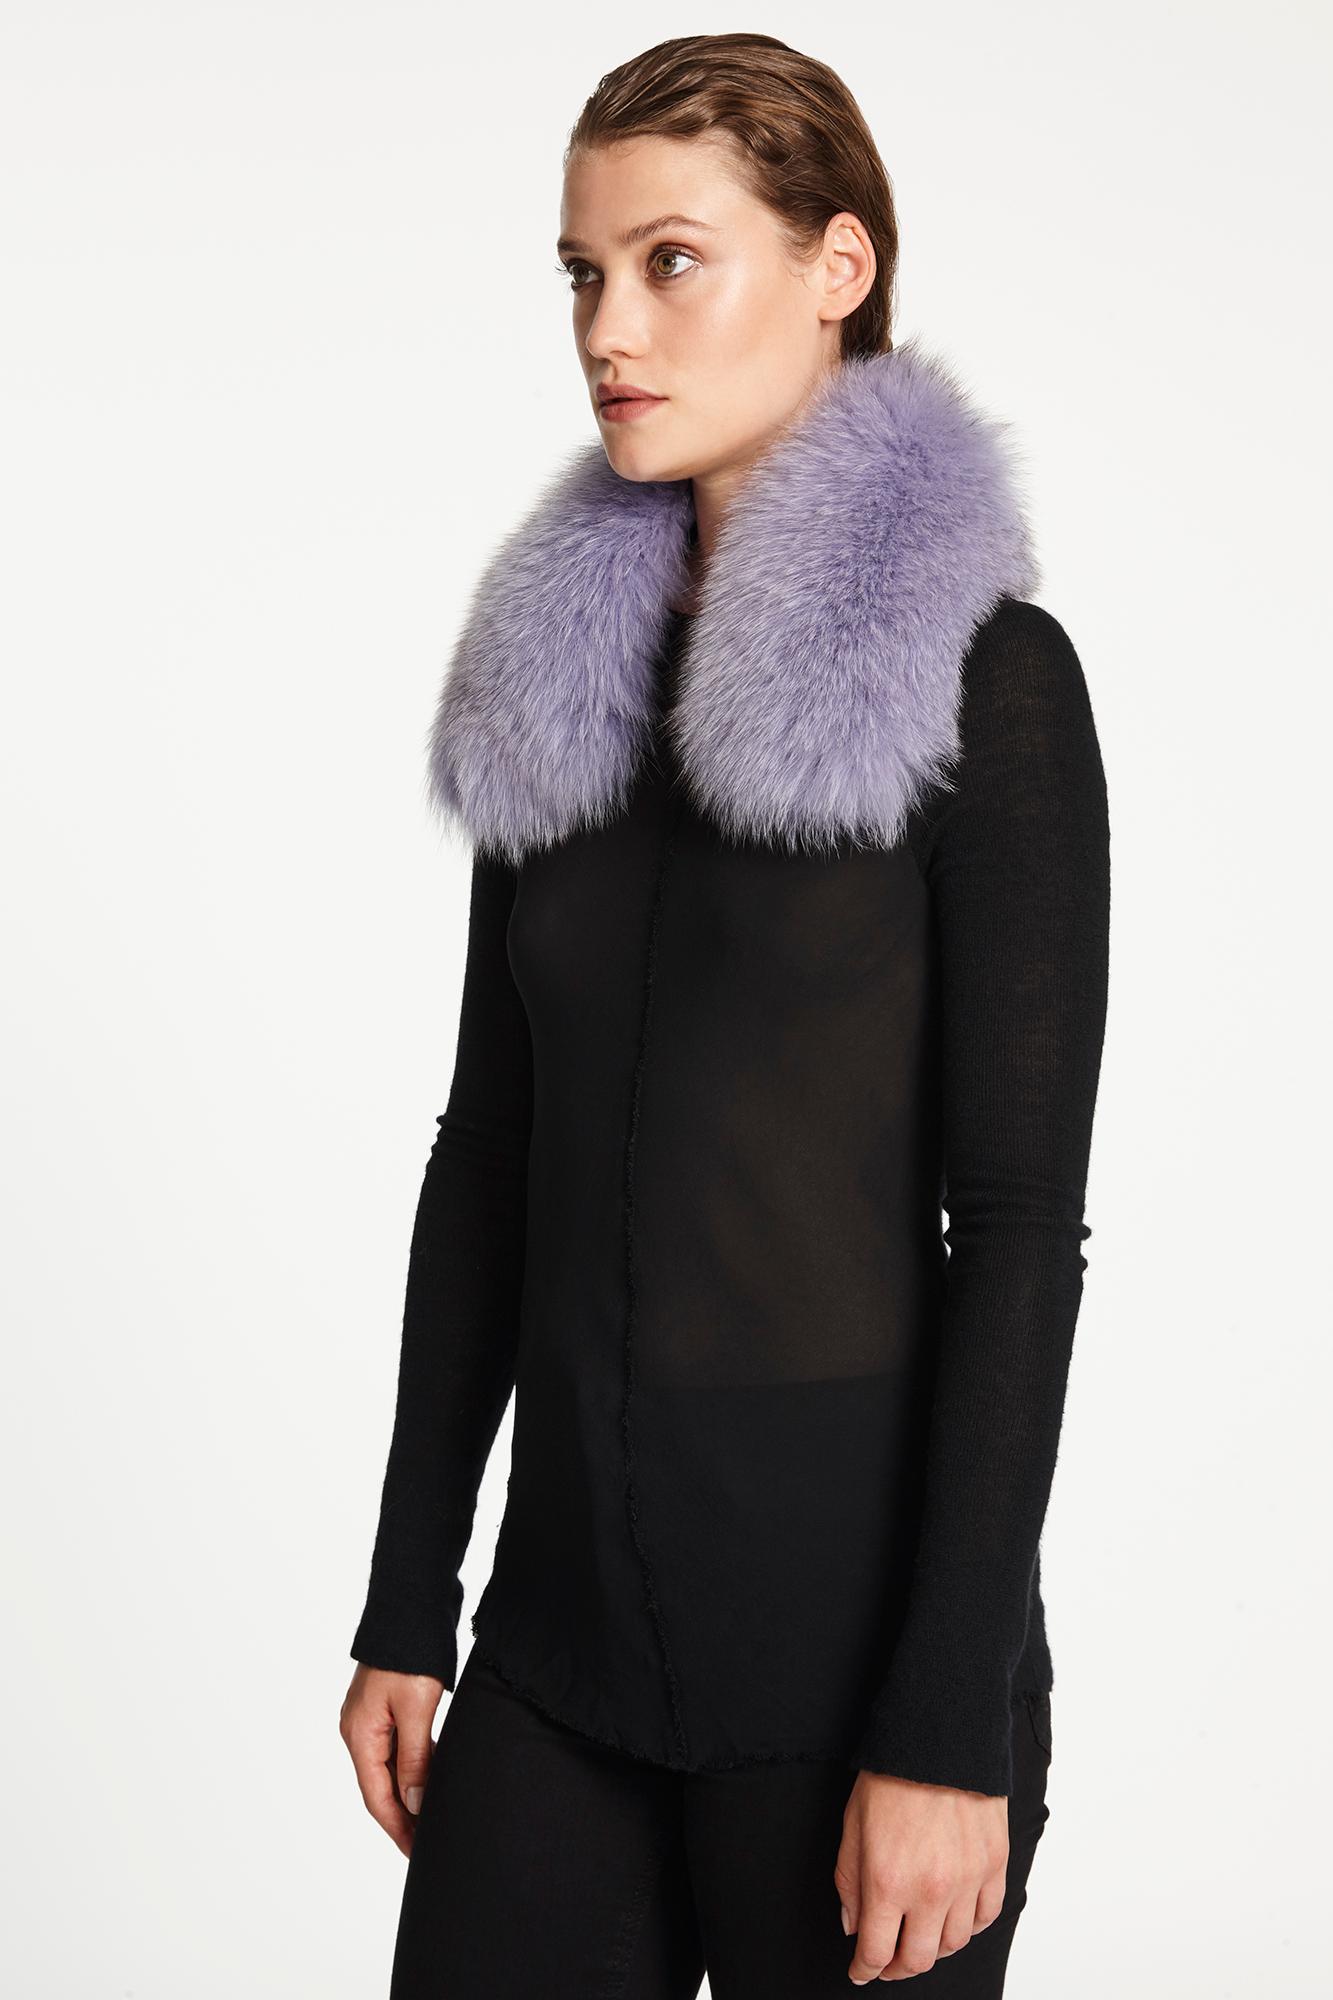 Women's or Men's Verheyen London Peter Pan Collar in Lilac Fox Fur - Brand New 